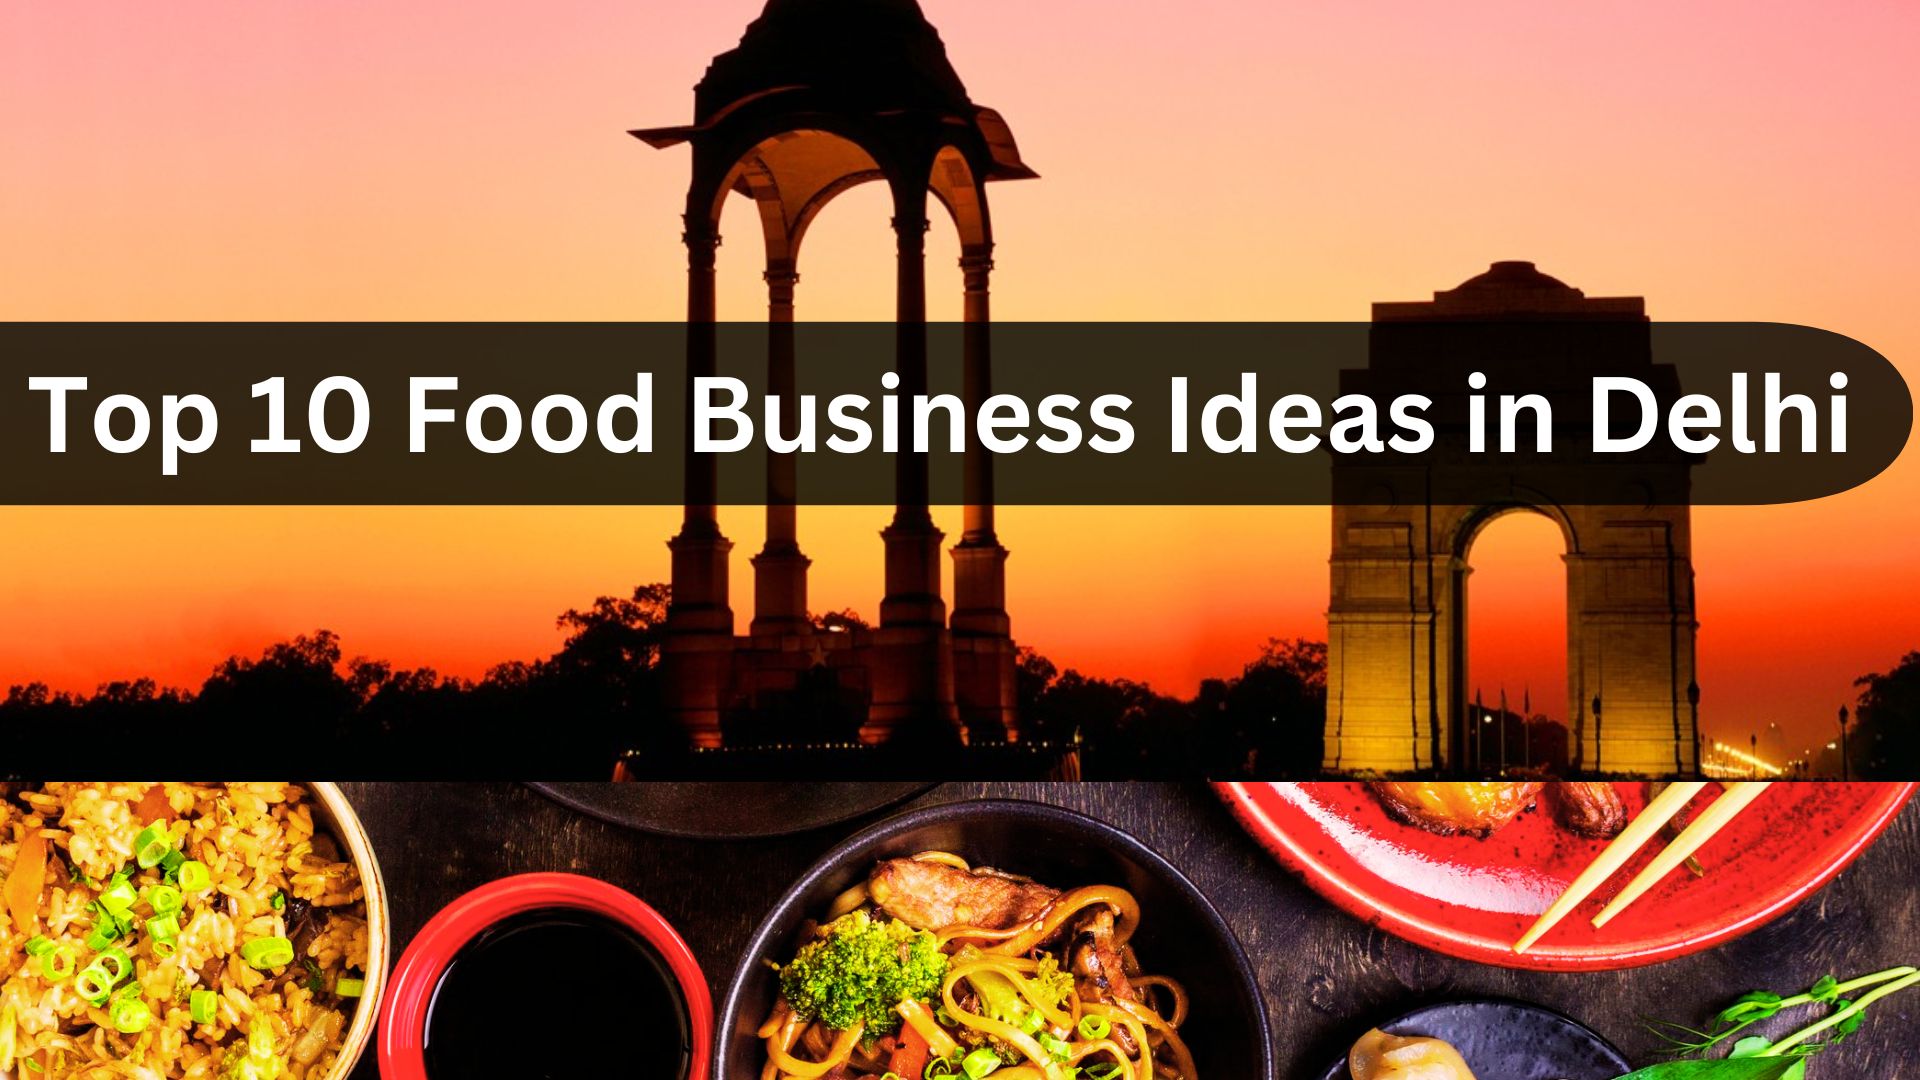 Top 10 Food Business Ideas in Delhi